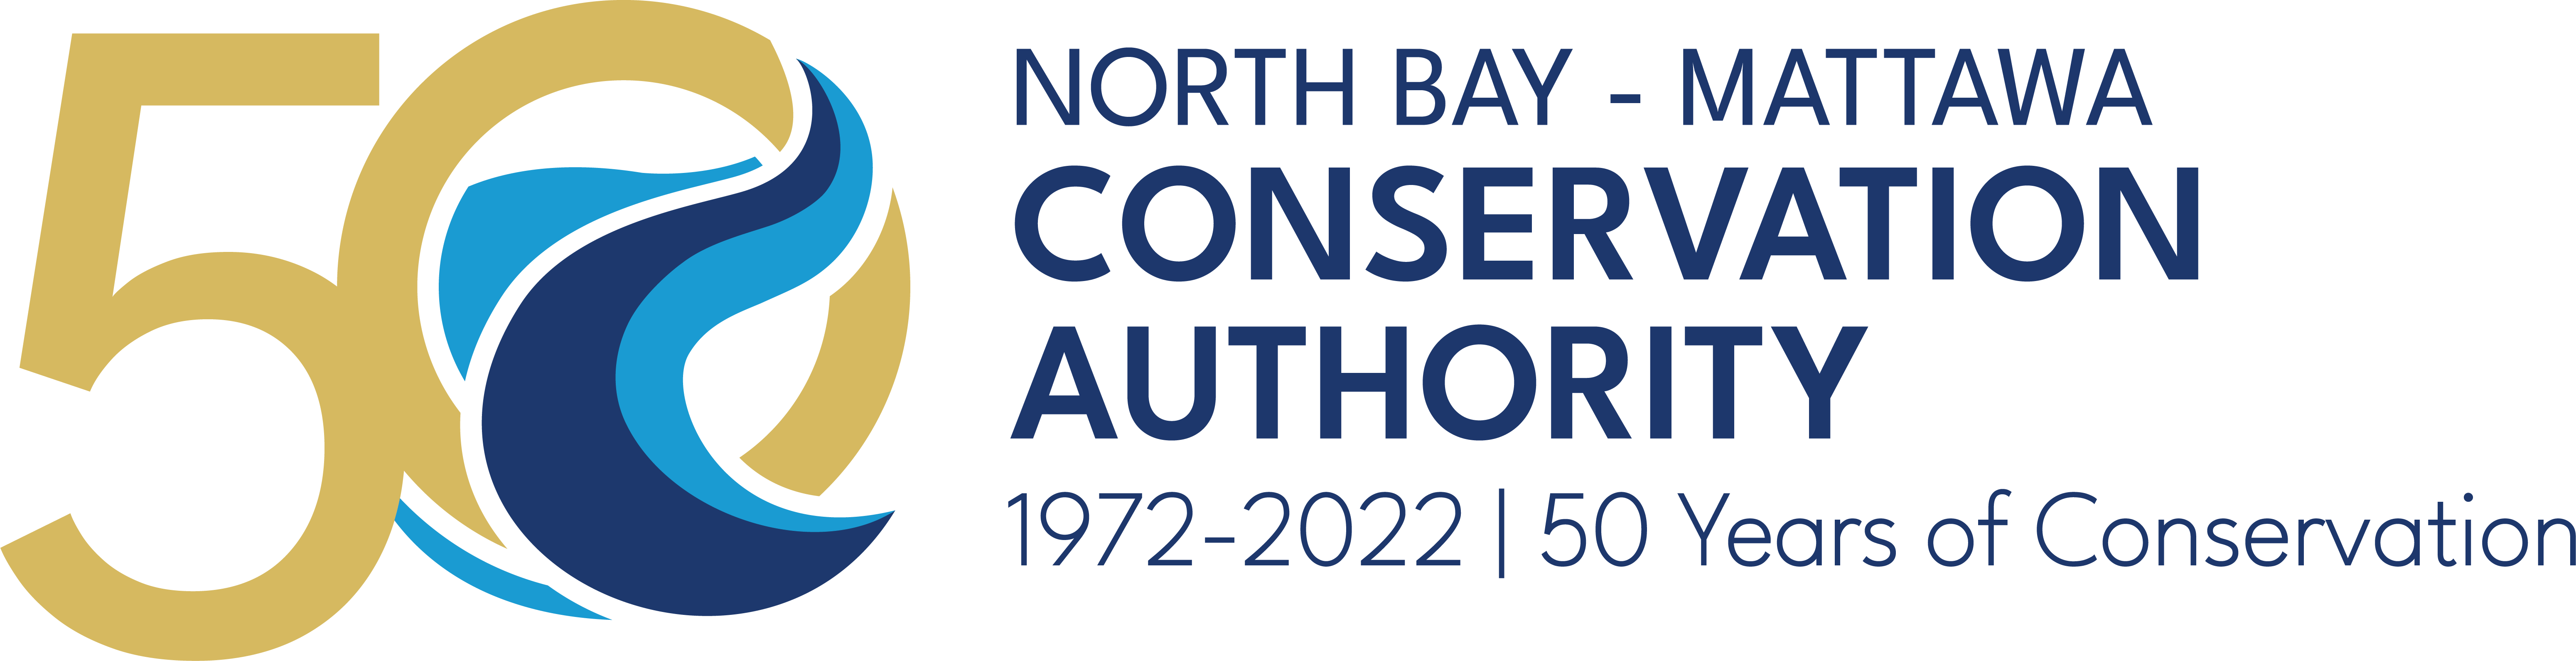 north bay mattawa conservation authority logo